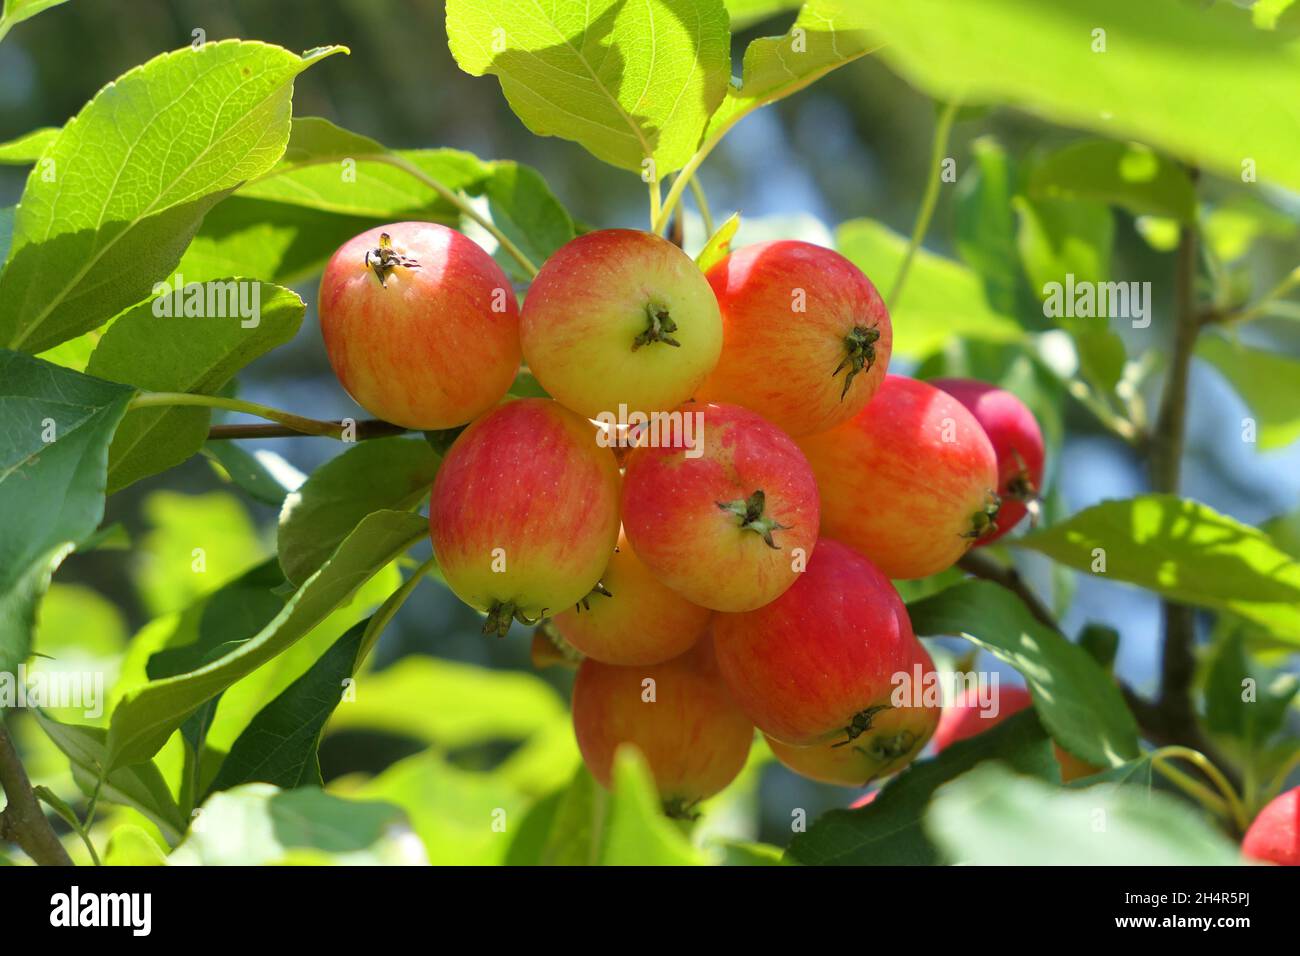 Crabapple tree full of apple fruits. Malus baccata, Dolgo variety. Stock Photo